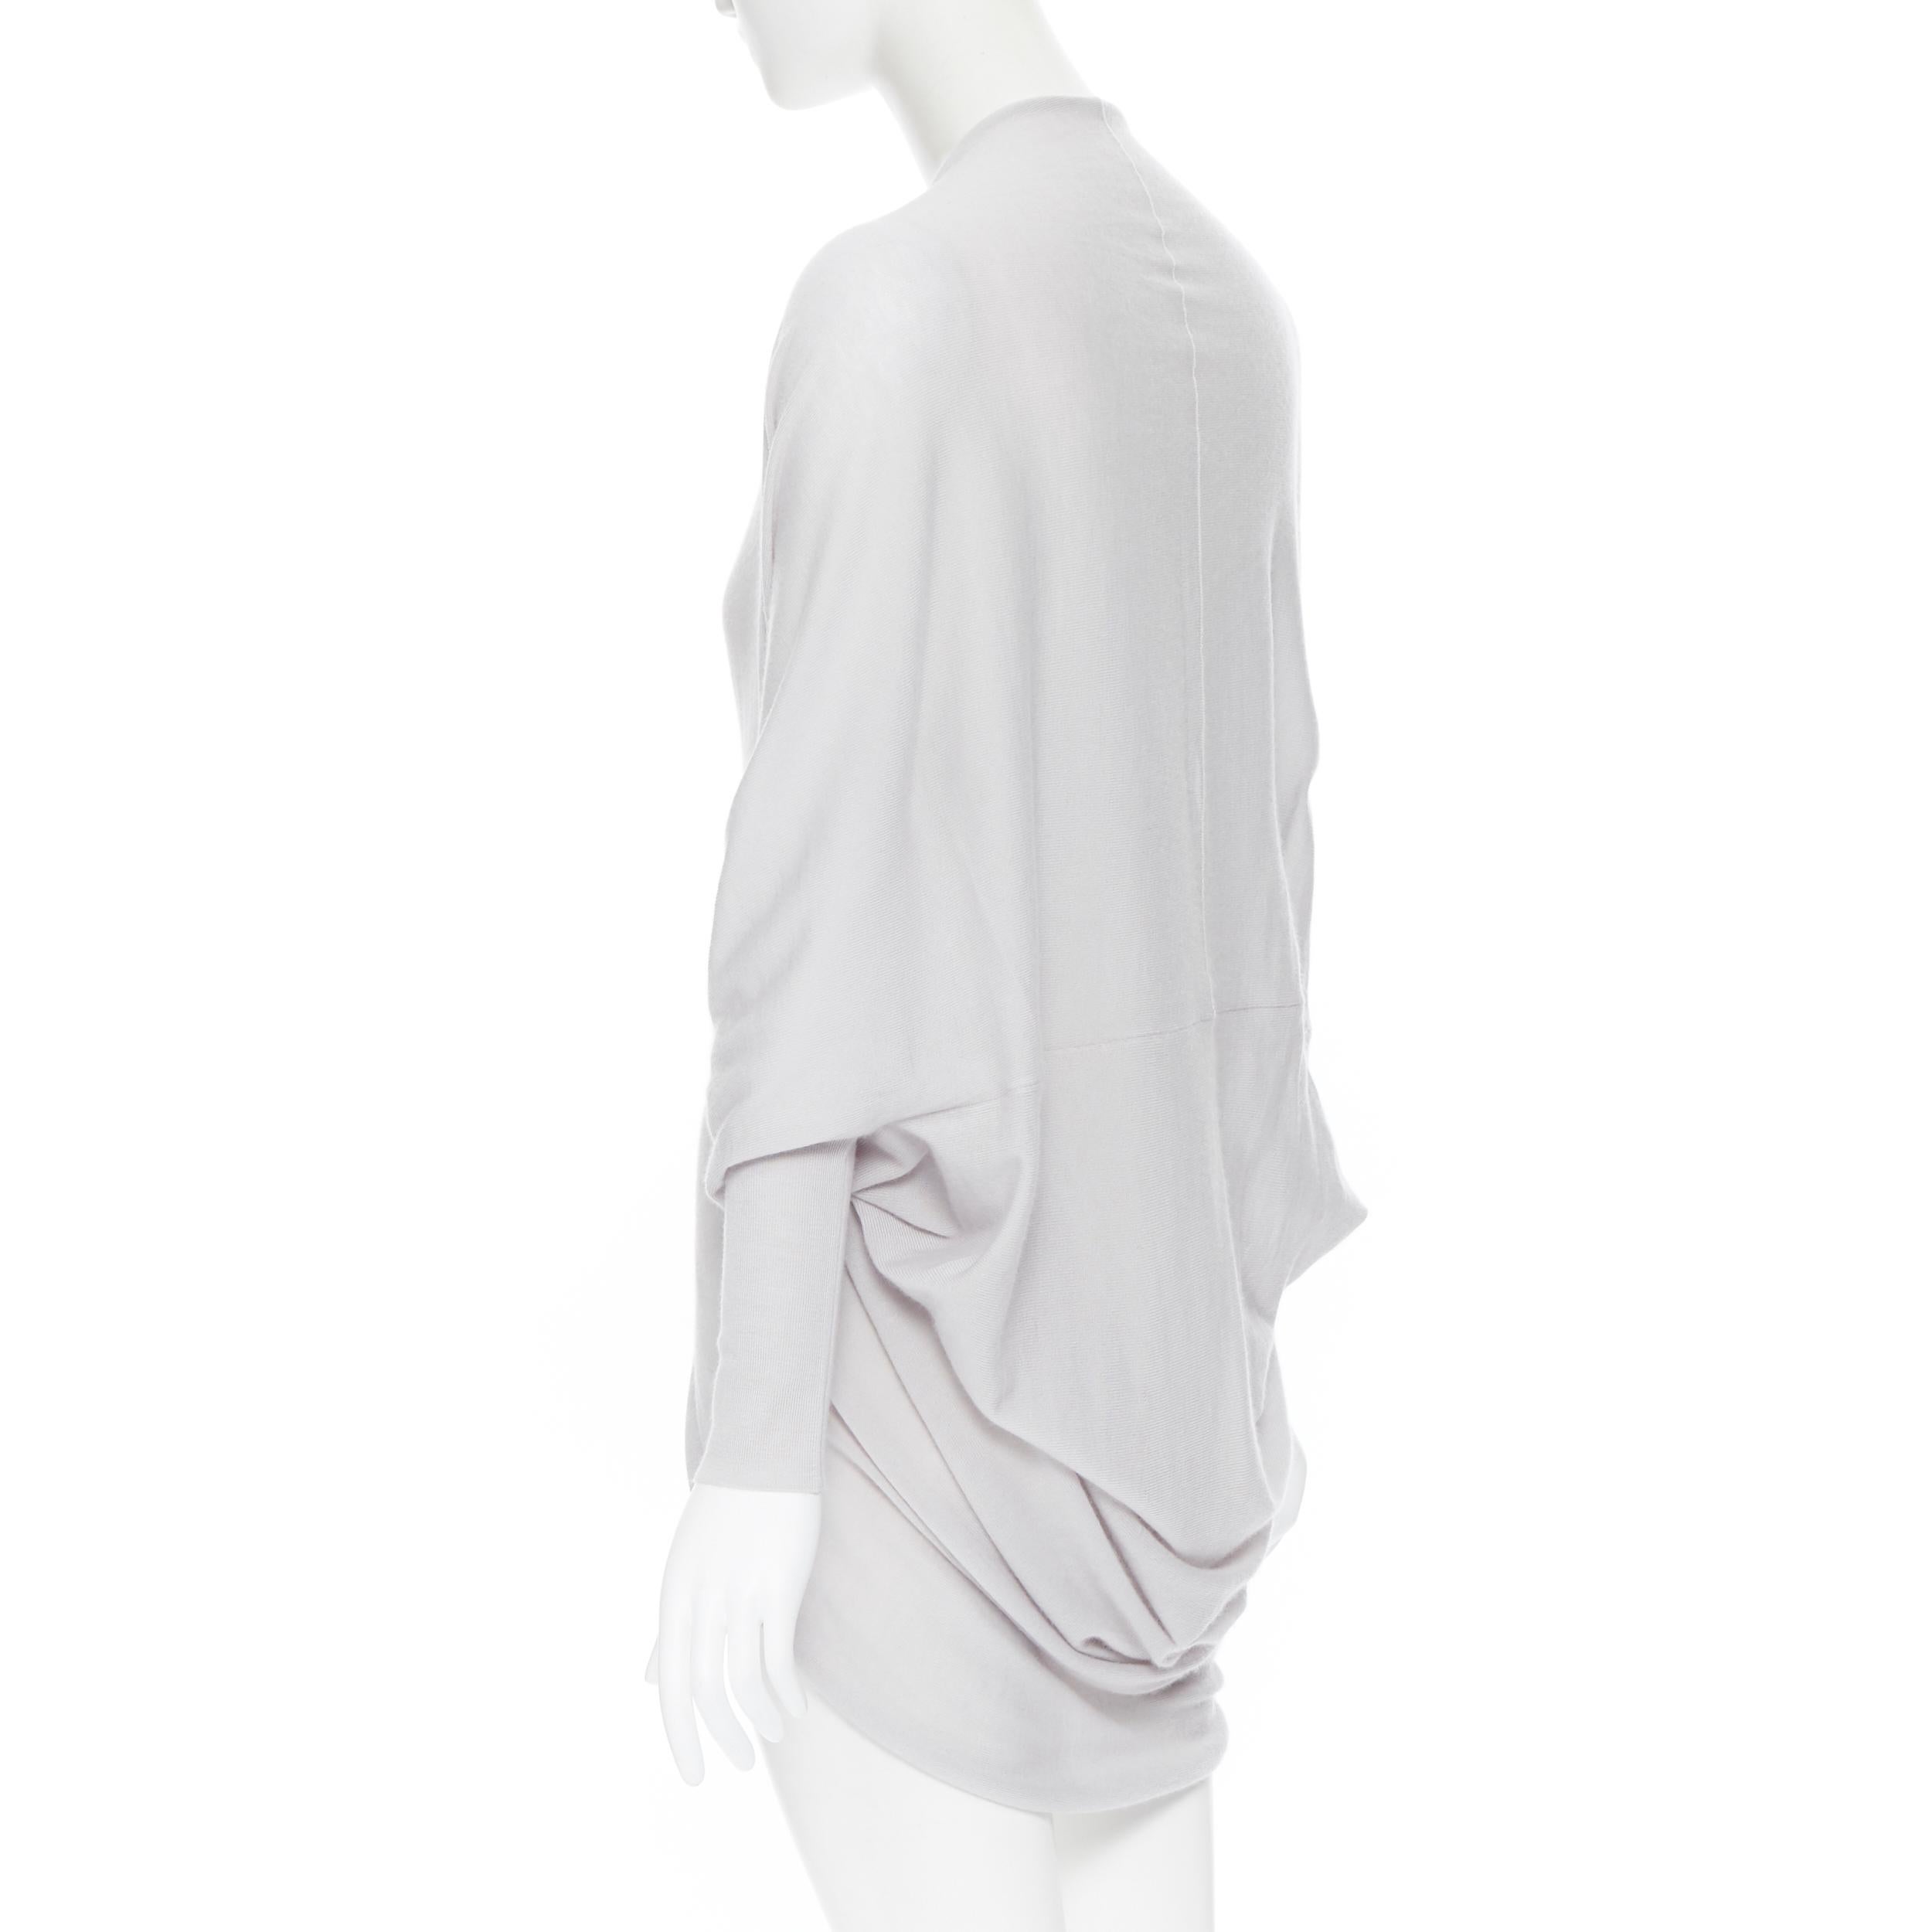 Women's LANVIN 100% cashmere light grey bat sleeve button front draped shrug cardigan S